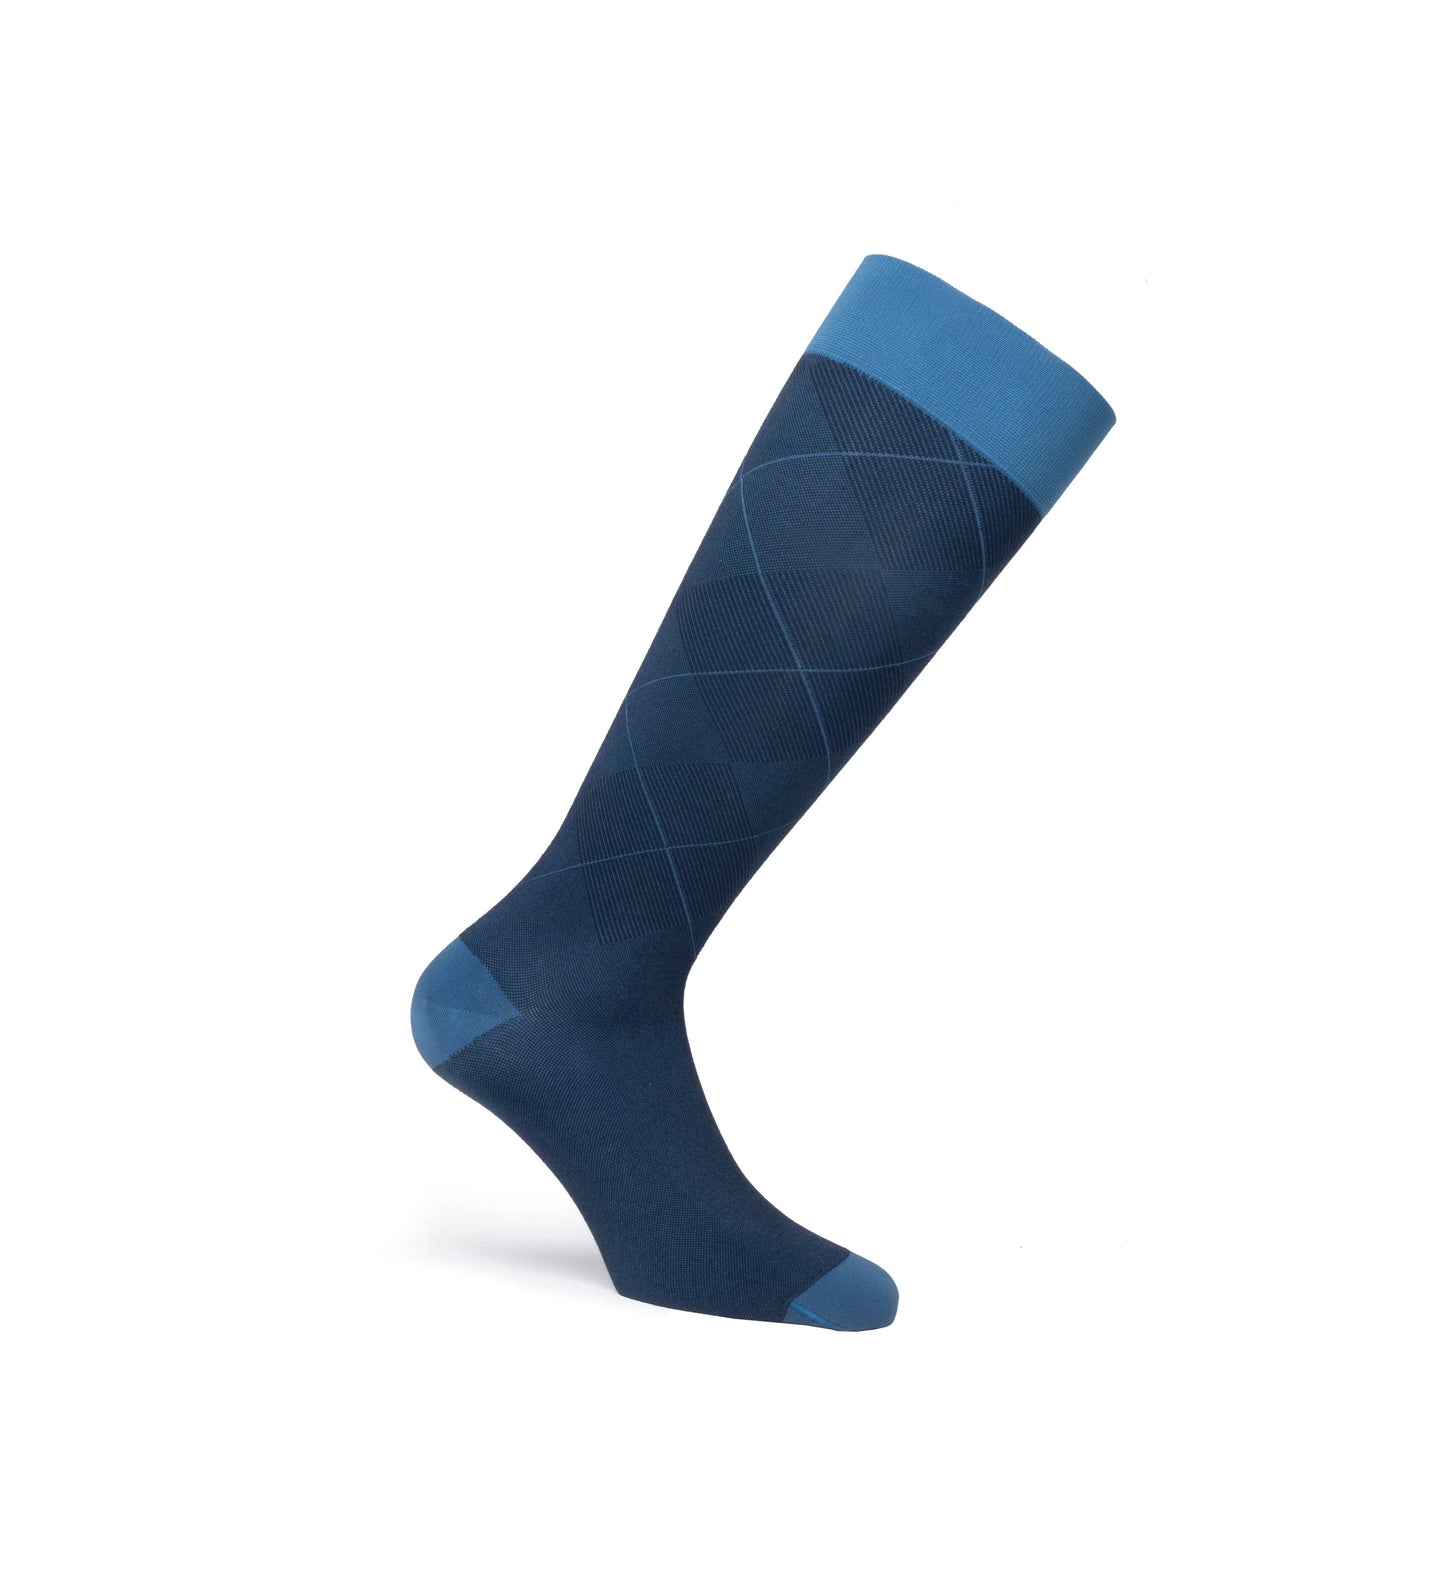 JOBST Casual Pattern Compression Socks 15-20 mmHg, Knee High, Closed Toe Petite